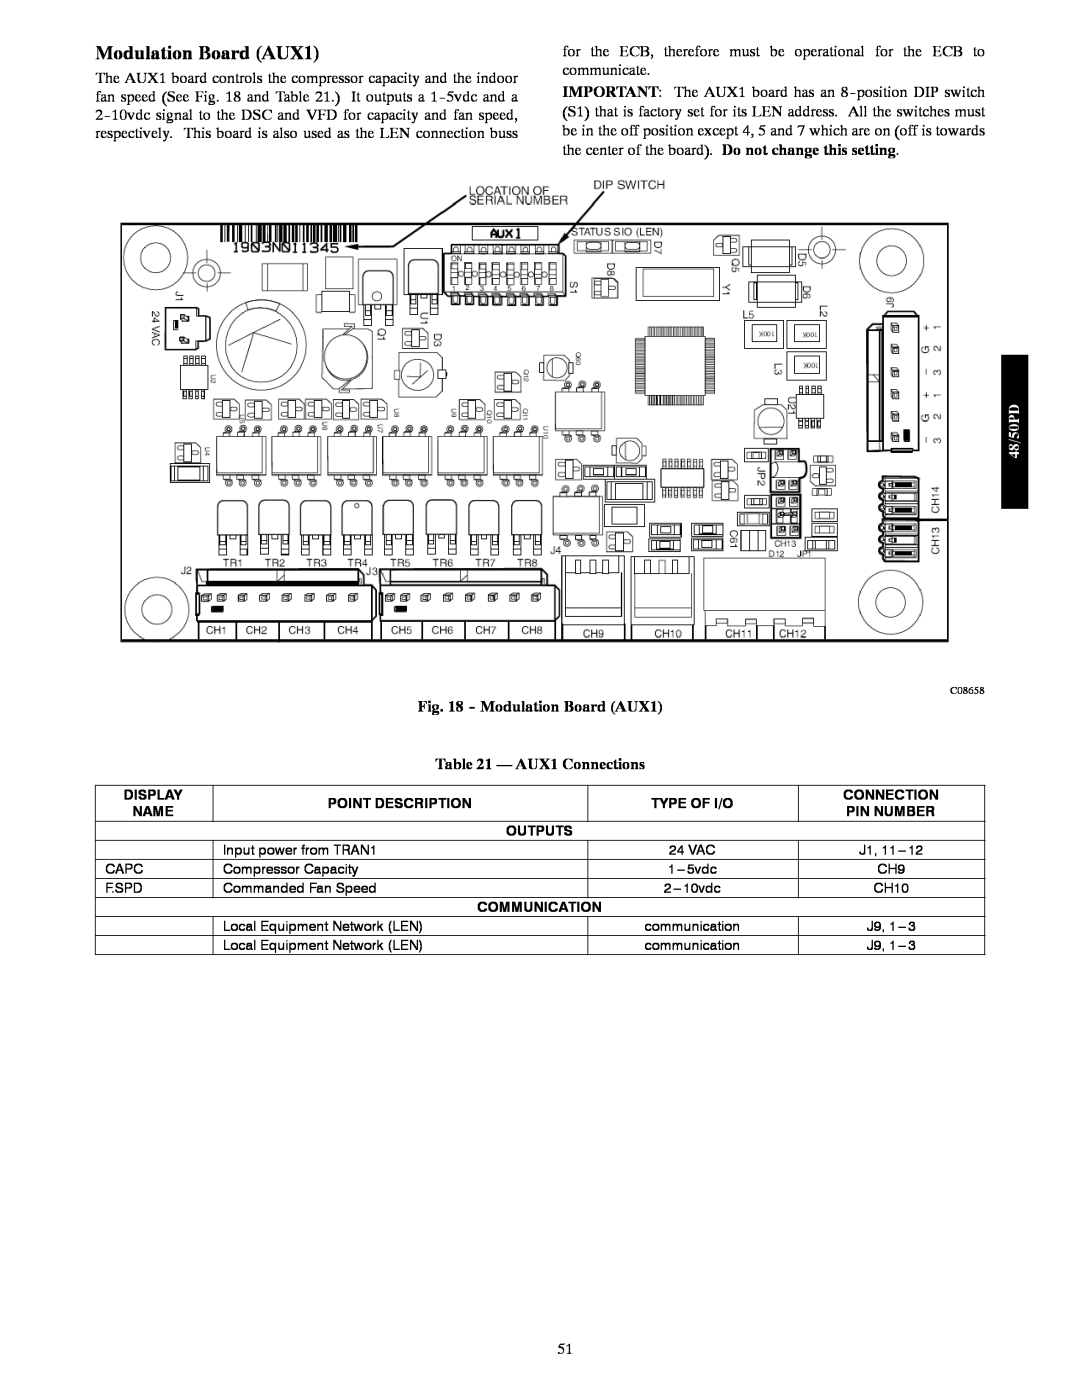 Carrier 48/50PD05 manual Modulation Board AUX1, AUX1 Connections 